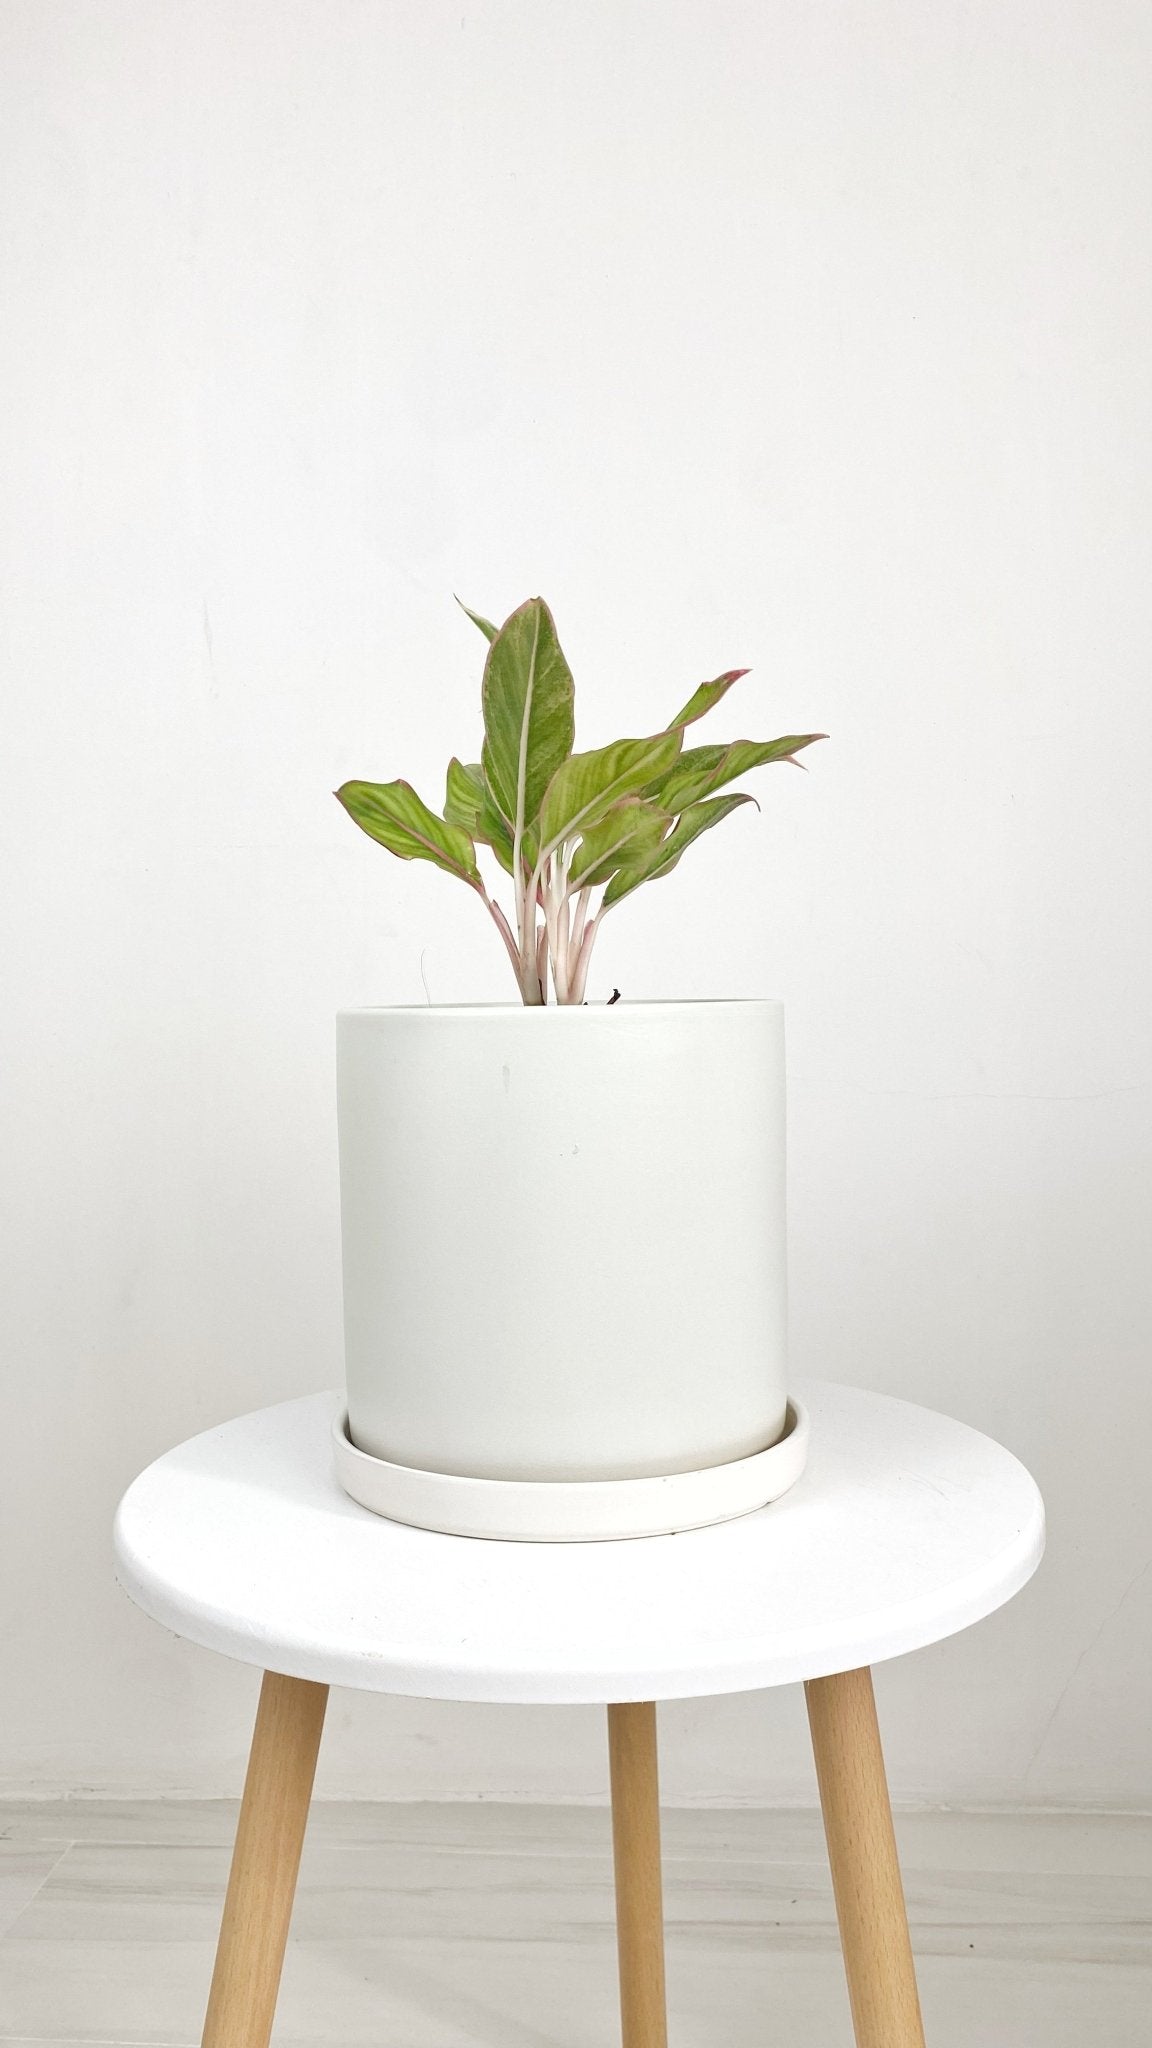 ES1257 Cylinder Glazed Clay Ceramic Pot with Ceramic Saucer - Pots For Plants